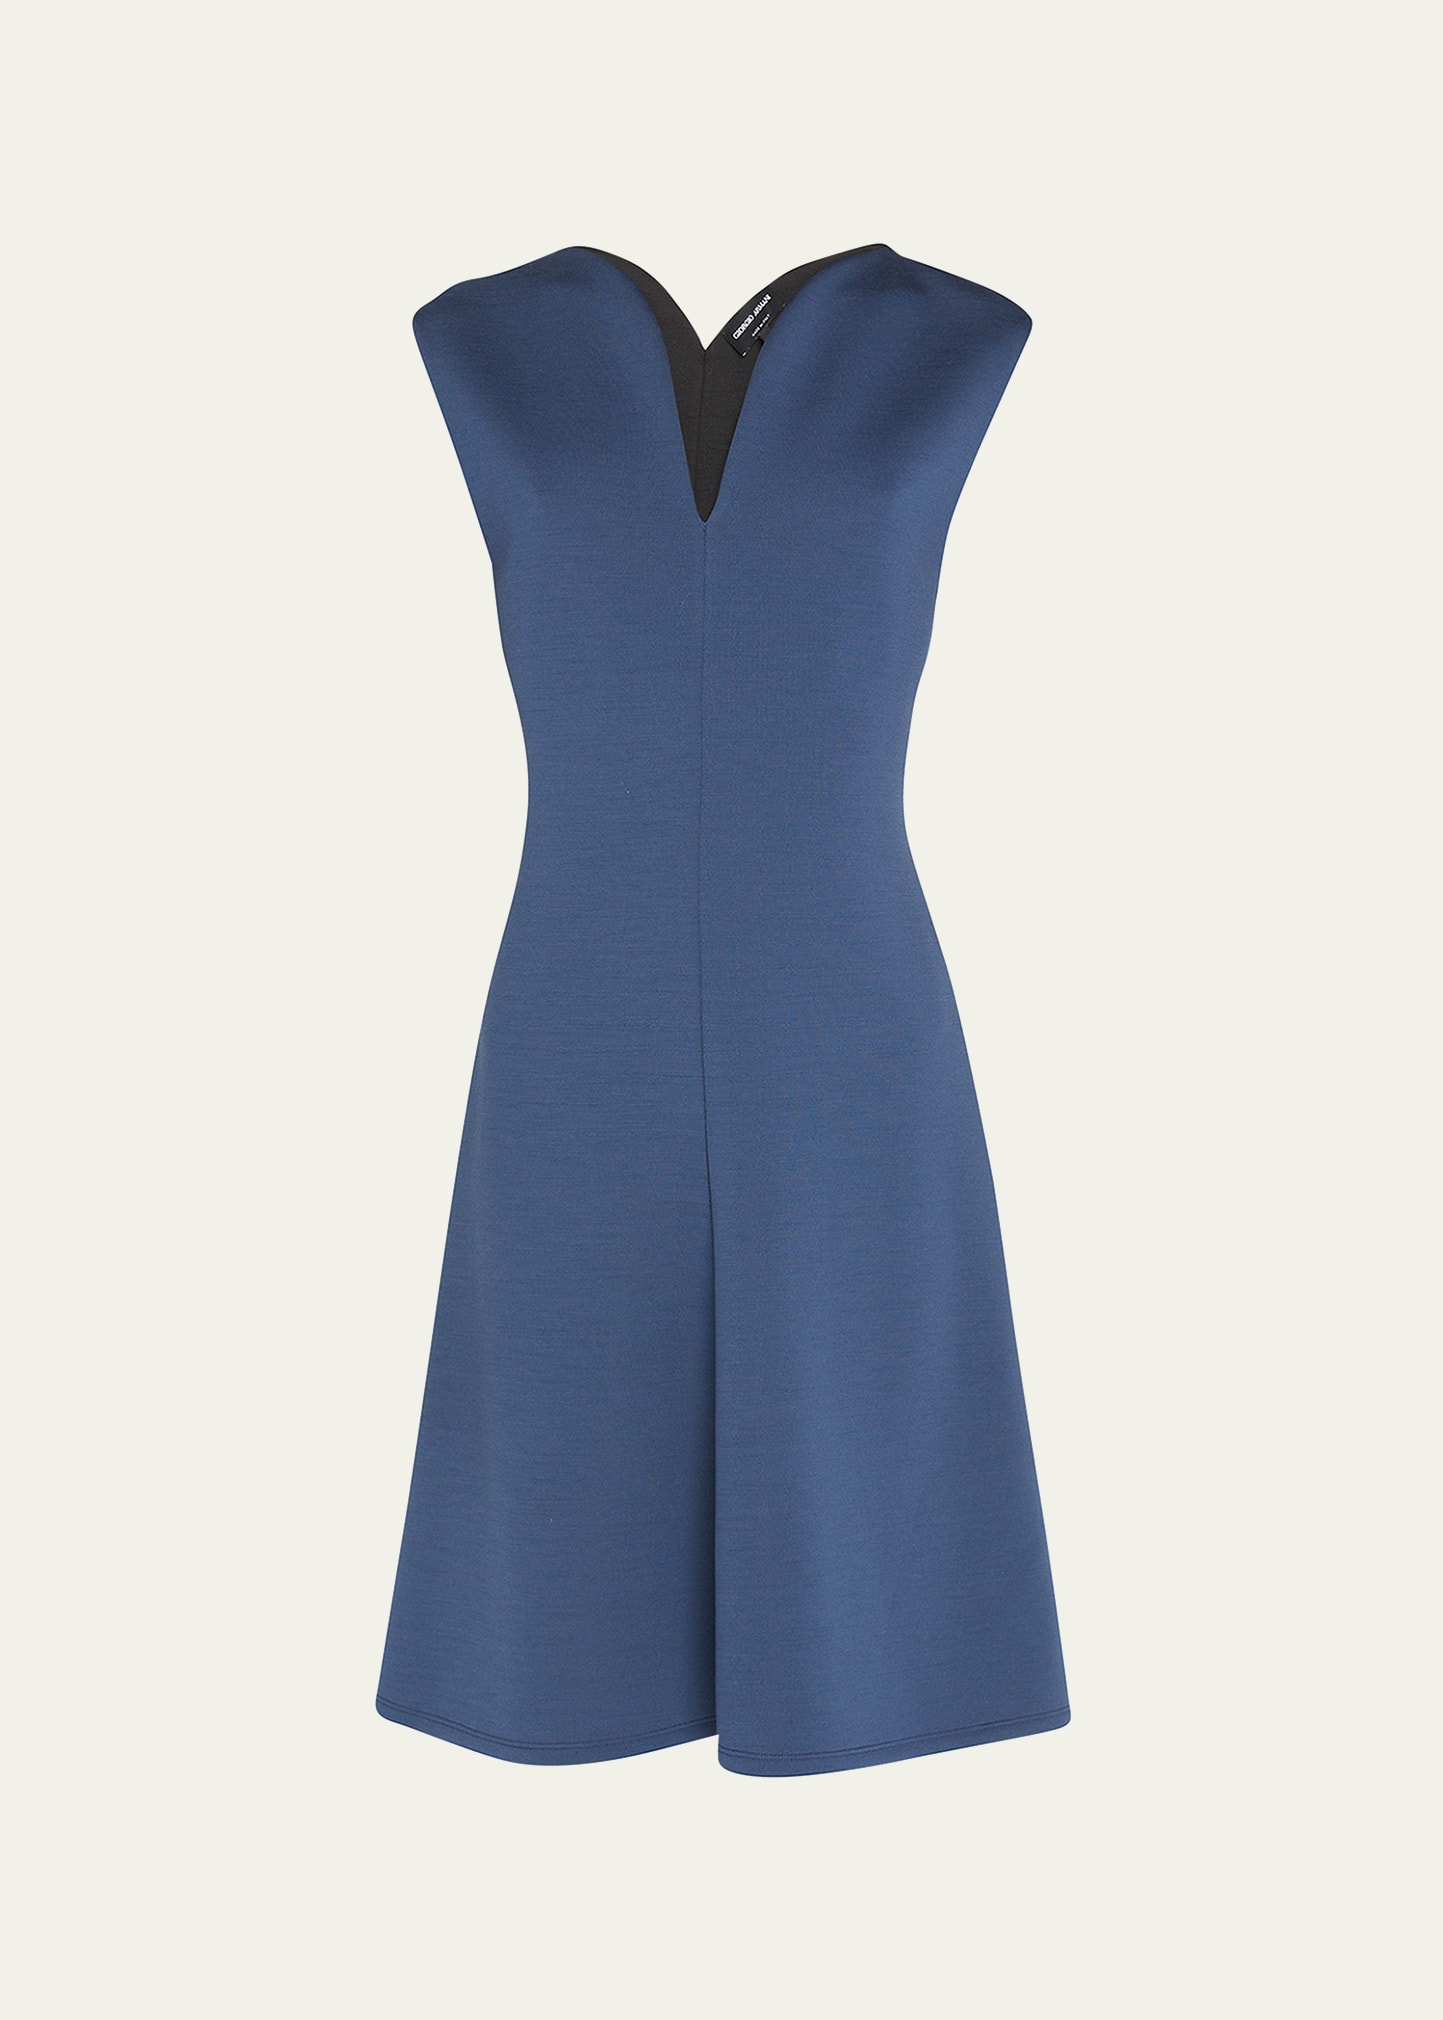 Giorgio Armani Mixed Wool Viscose Double Jersey Dress In Navy